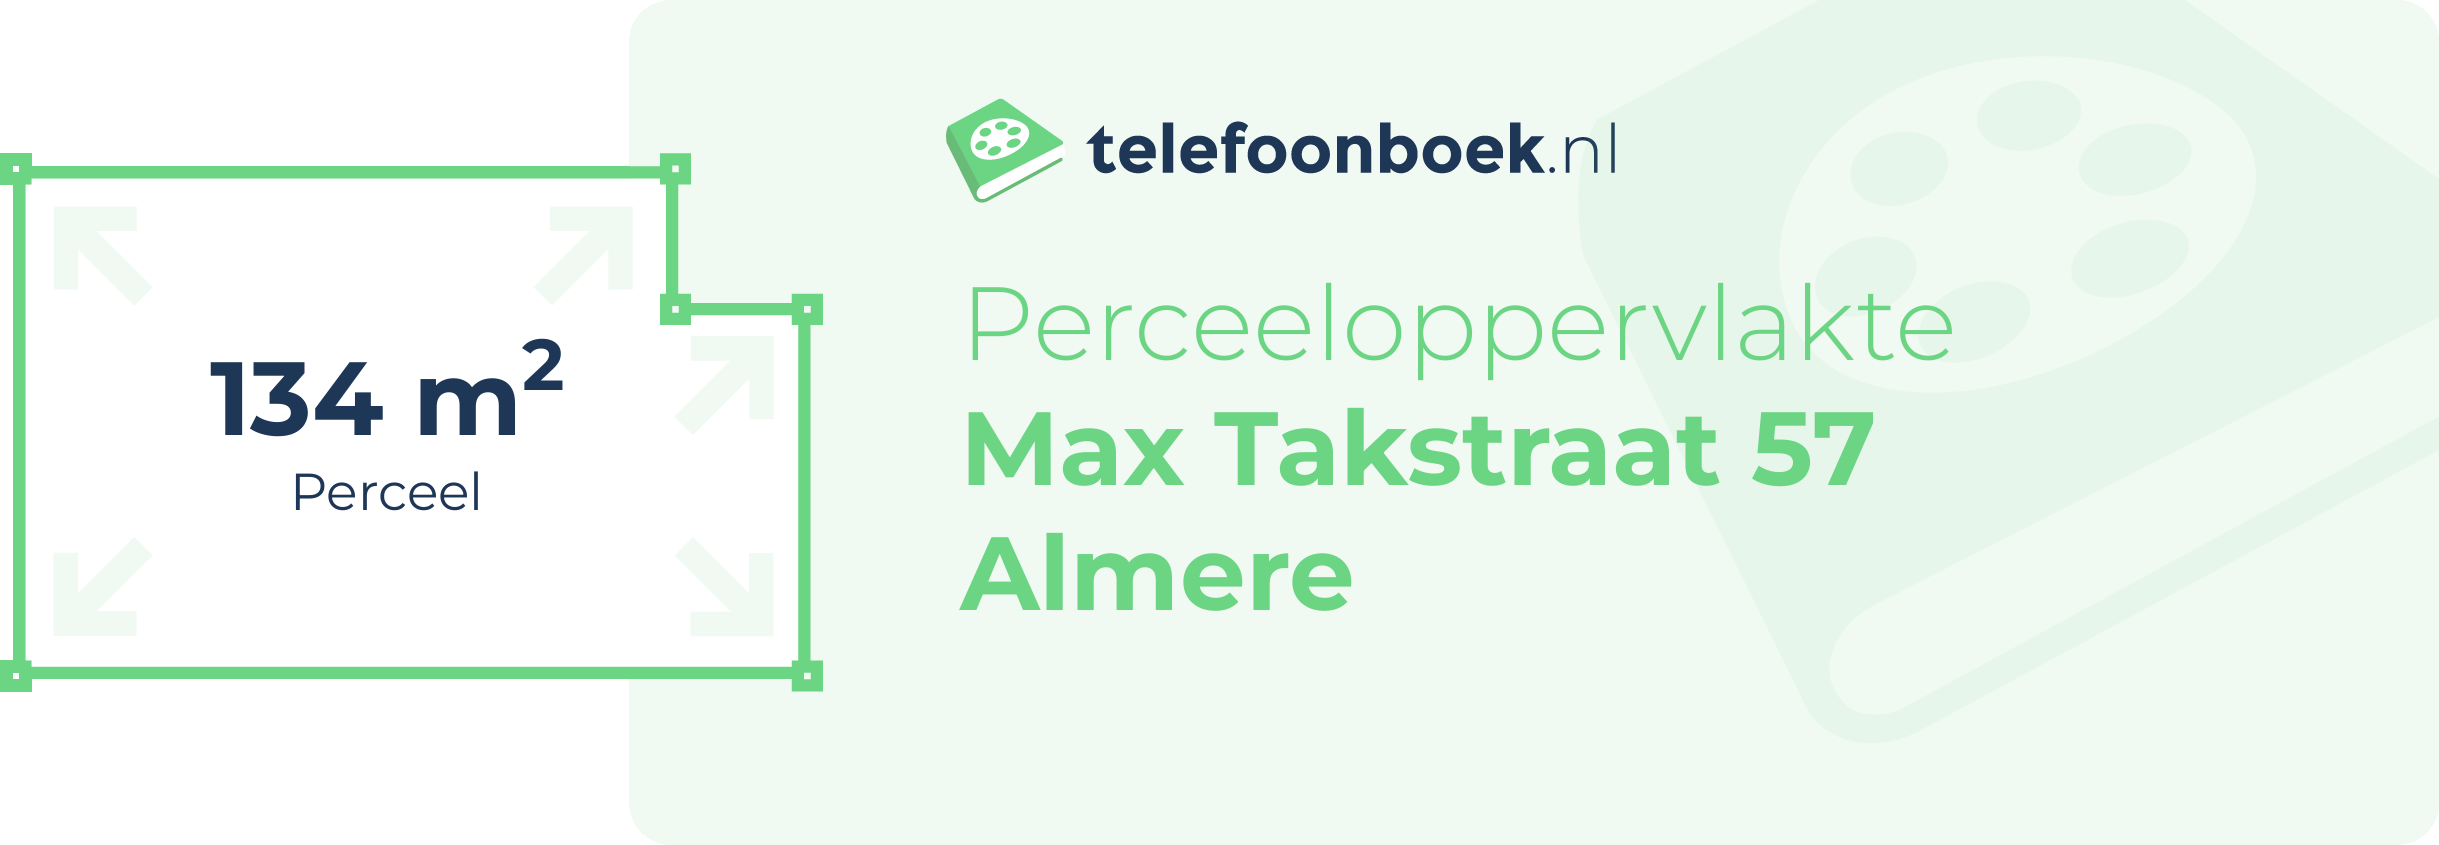 Perceeloppervlakte Max Takstraat 57 Almere